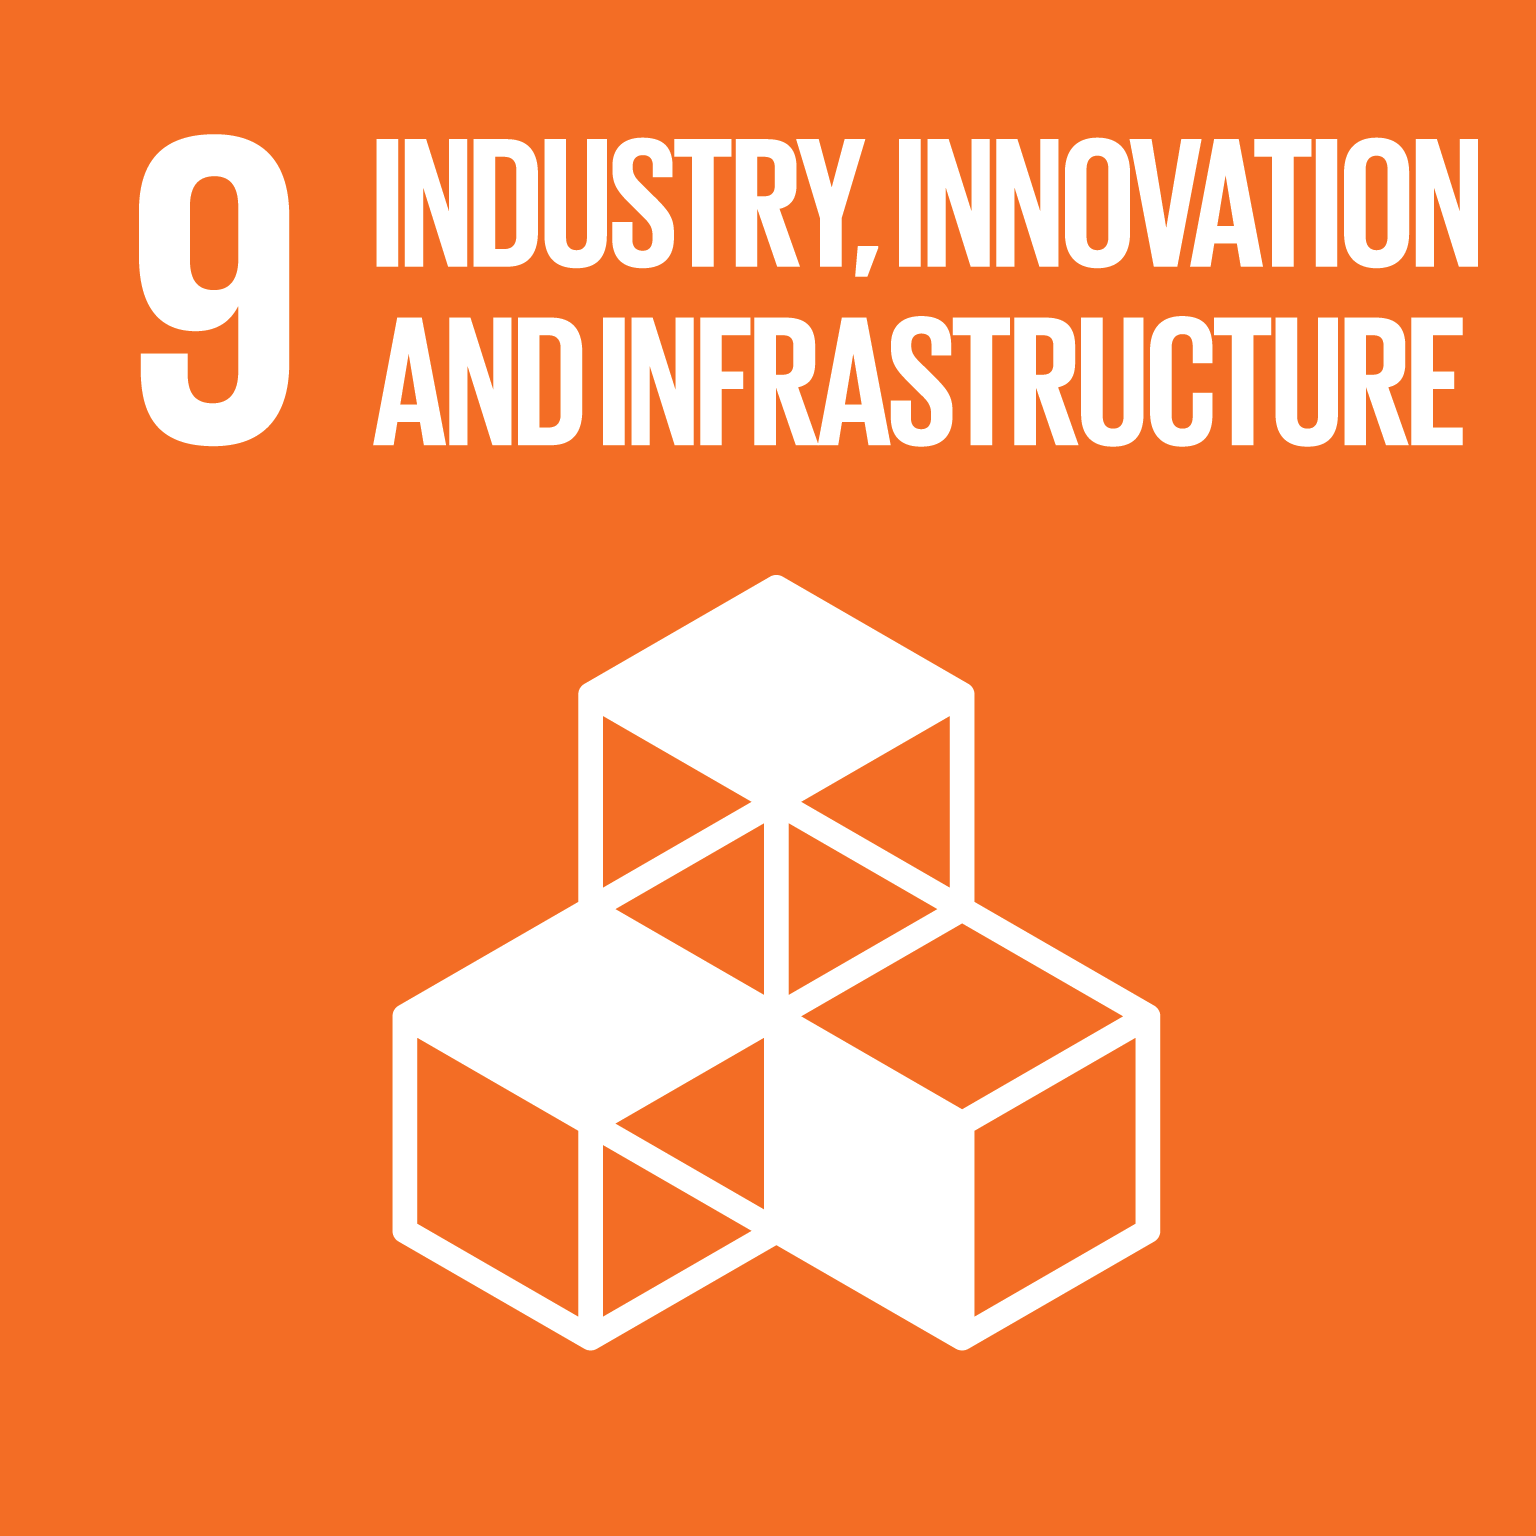 Verdensmål 9: Industri, innovation og infrastruktur